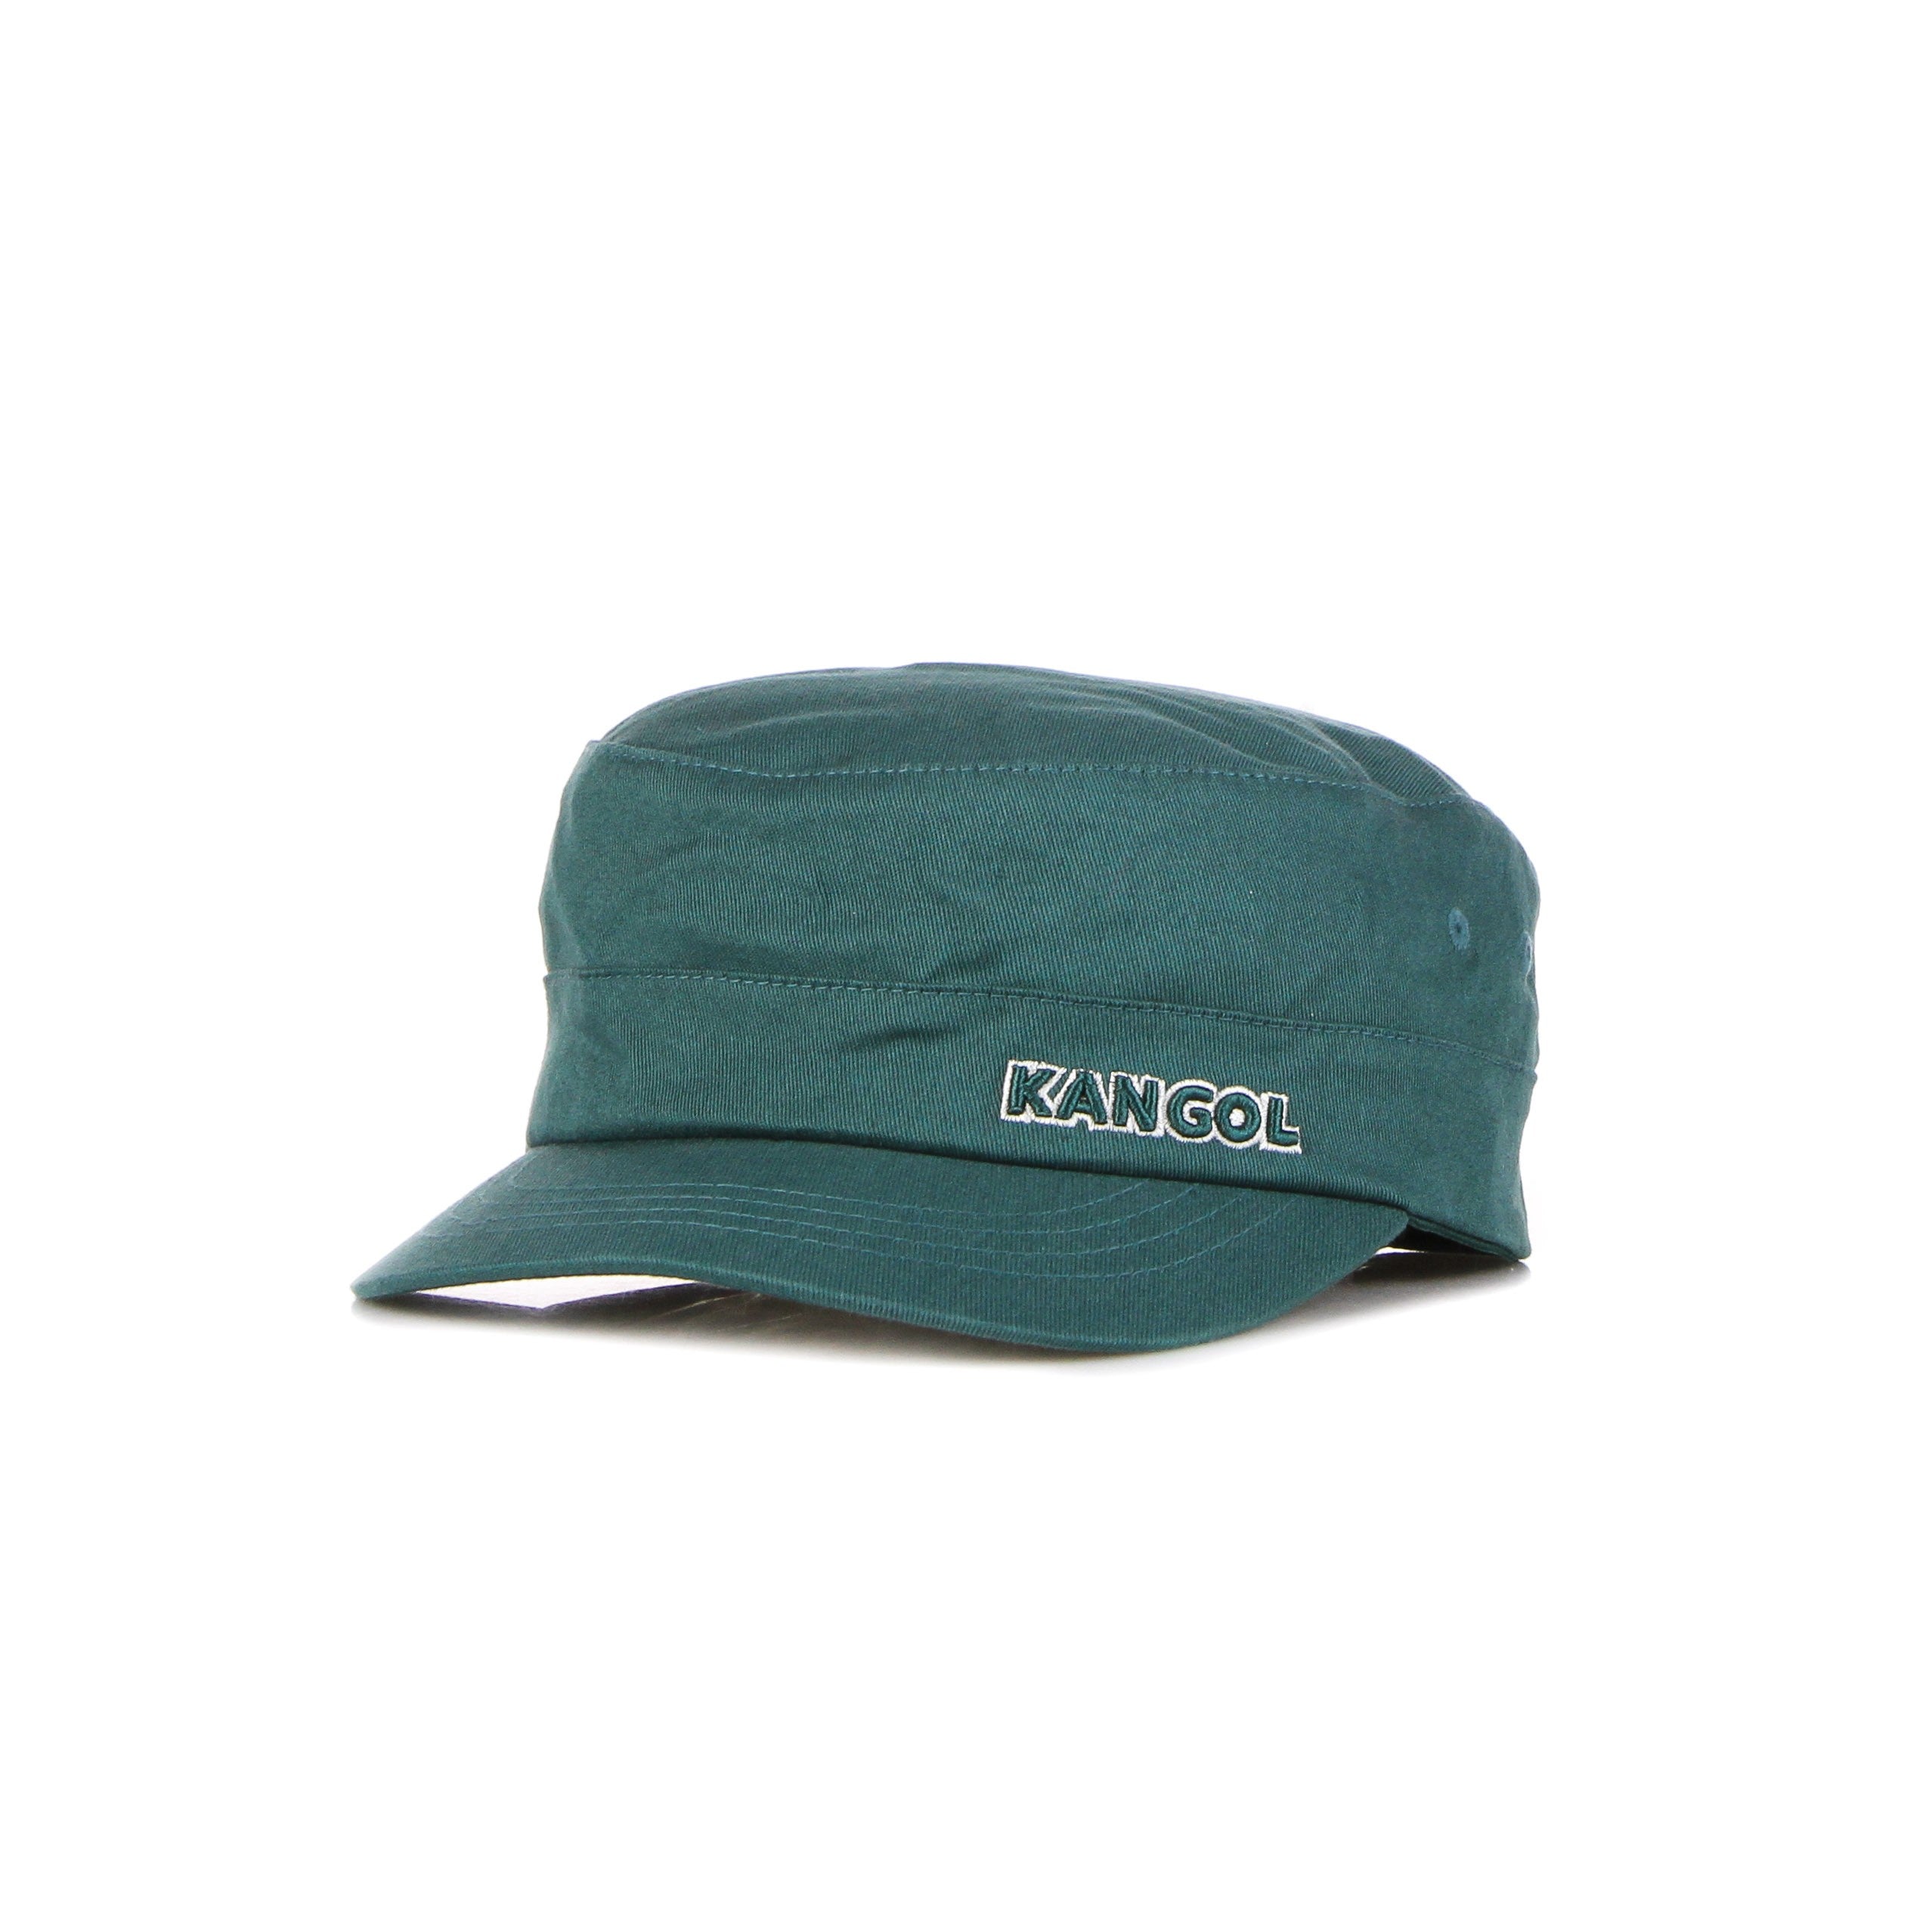 Flat Visor Cap for Men Cotton Twill Army Cap Green